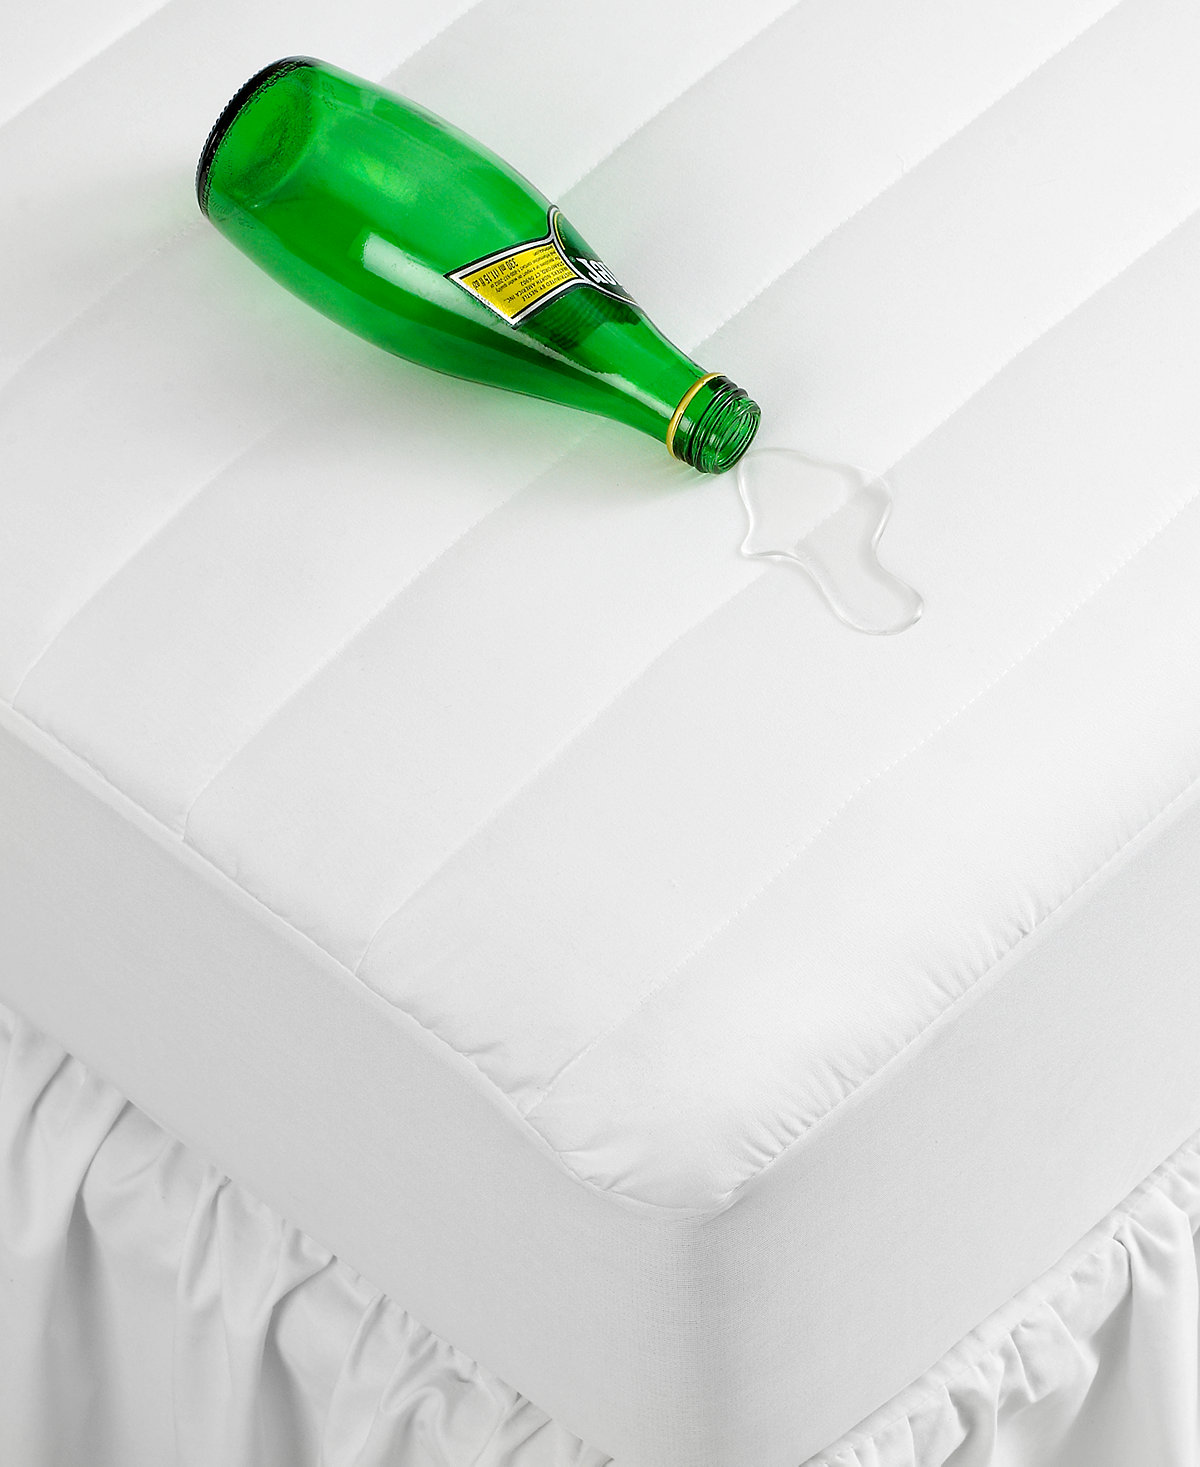 Home Design waterproof mattress pad for $14